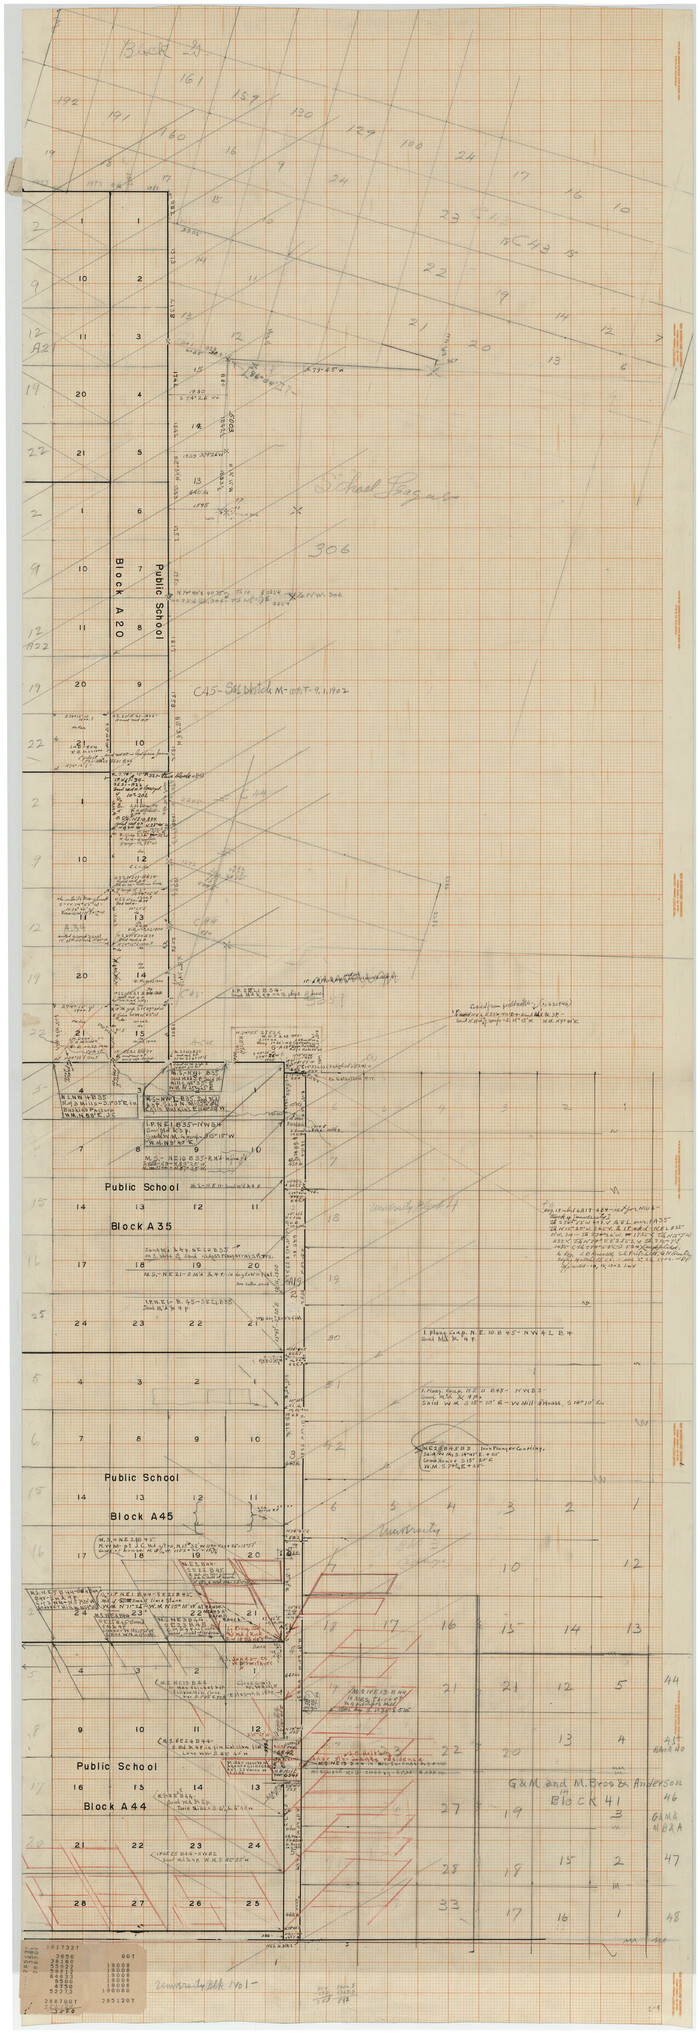 89739, [Sketch of PSL Blocks A20, A35, A44, A45], Twichell Survey Records